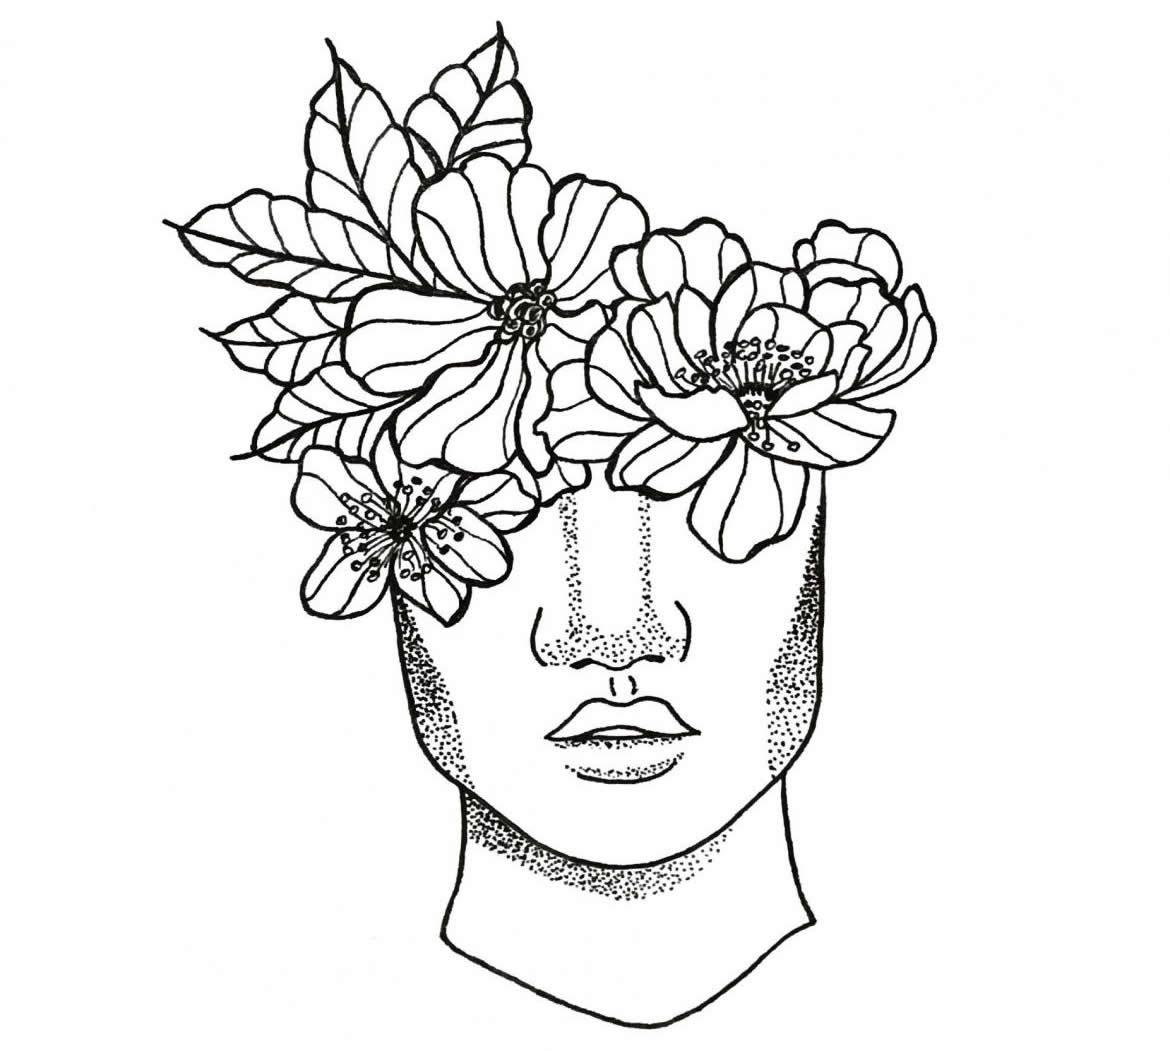 Blooming Mind illustration 